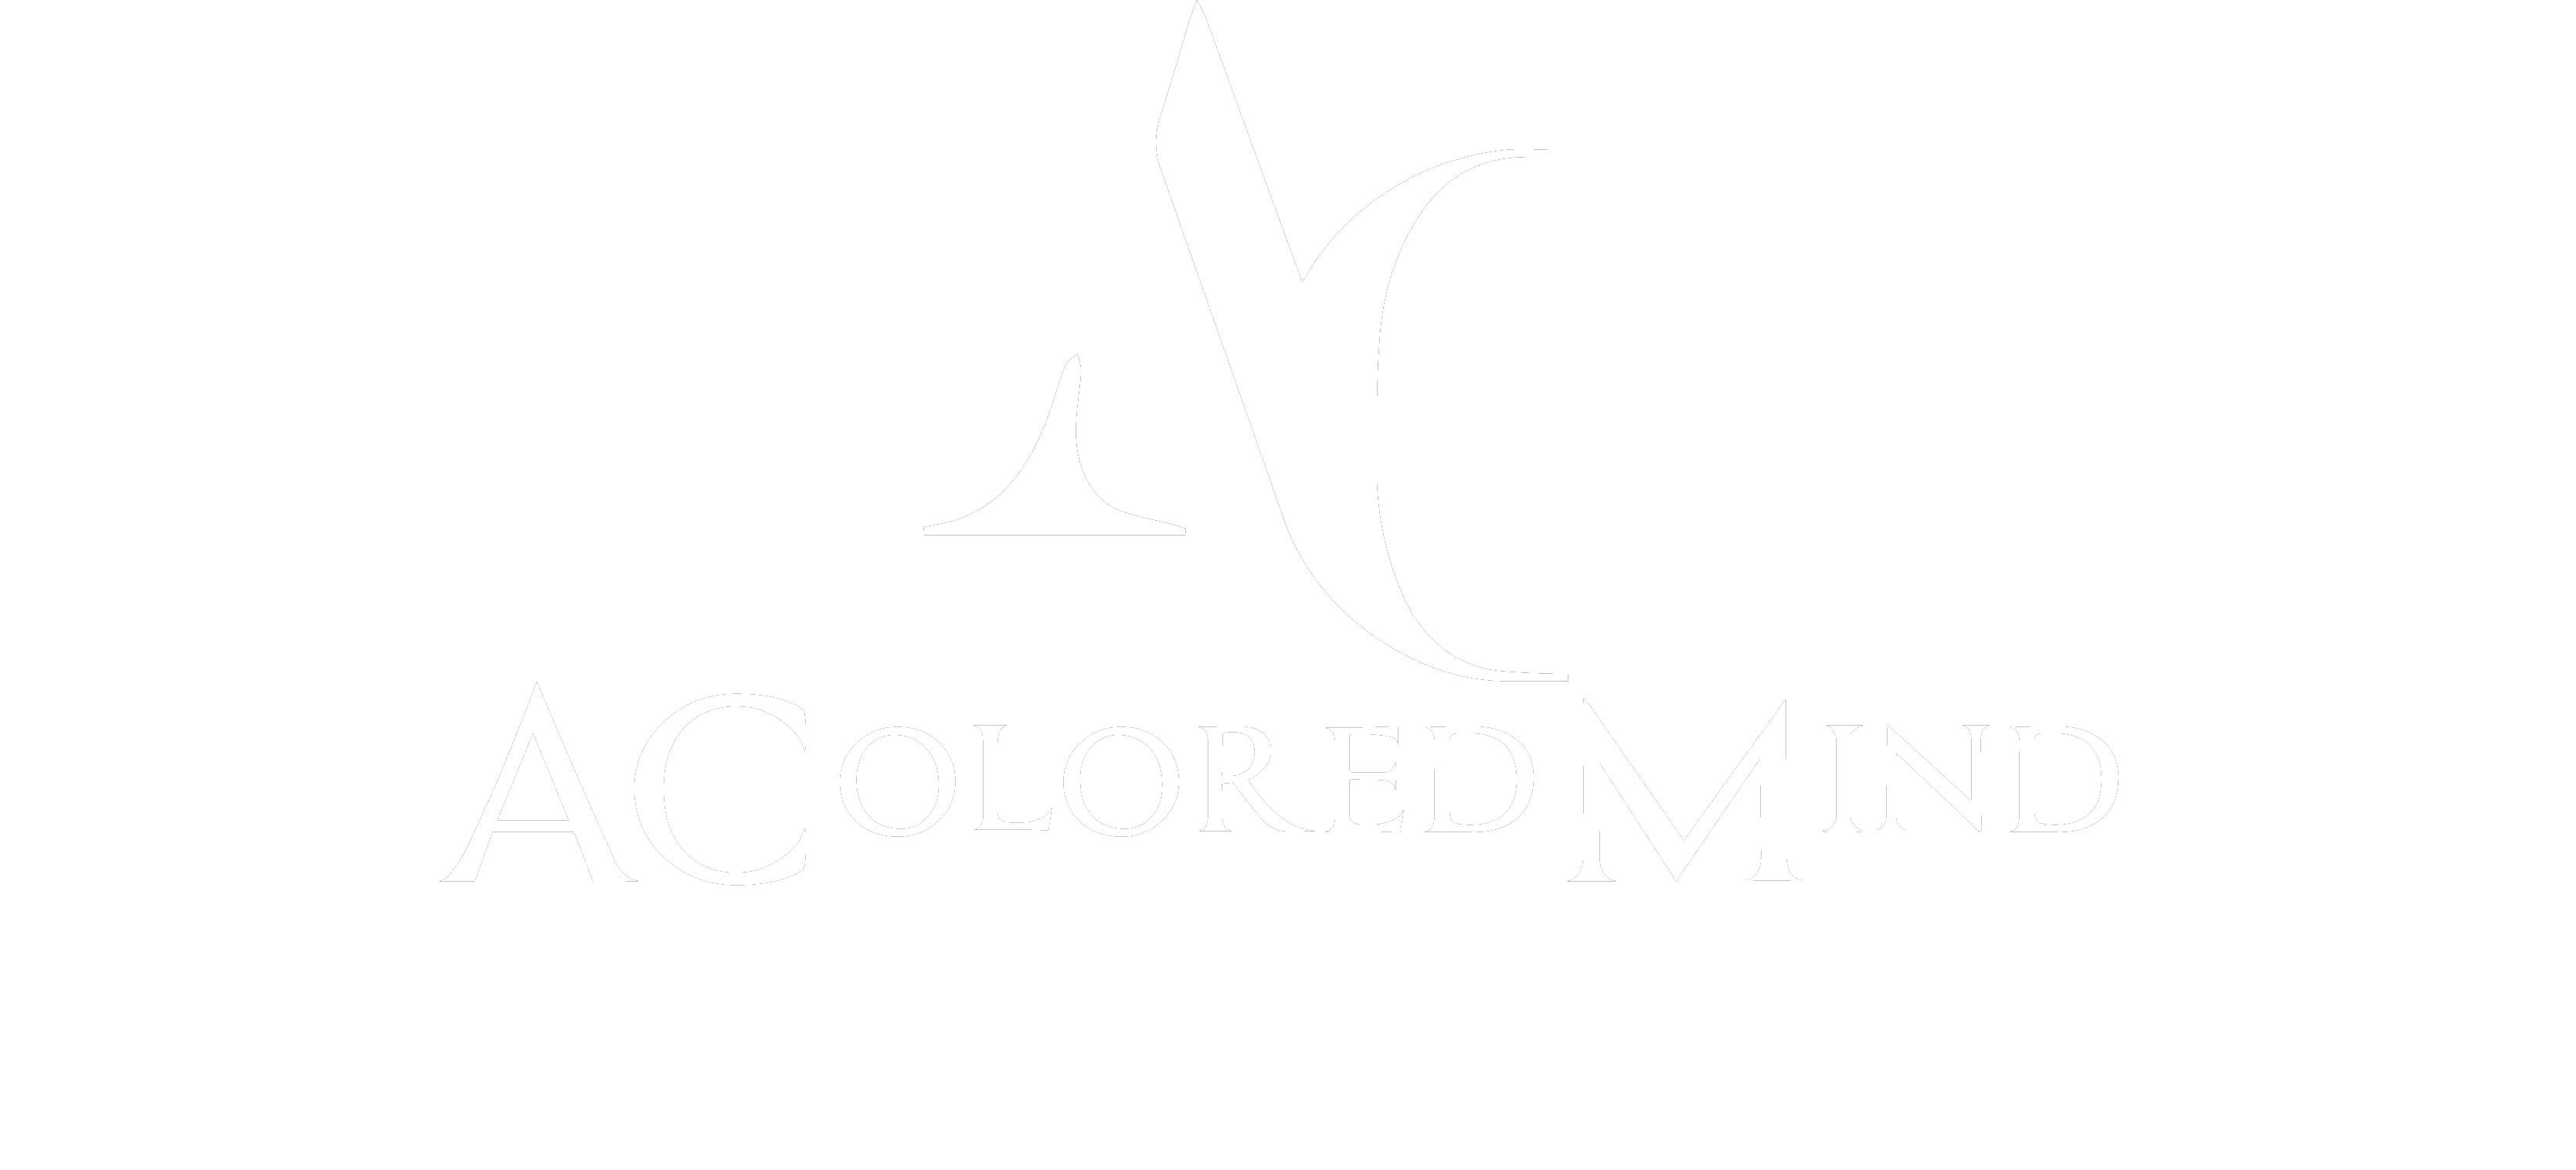 A Colored Mind